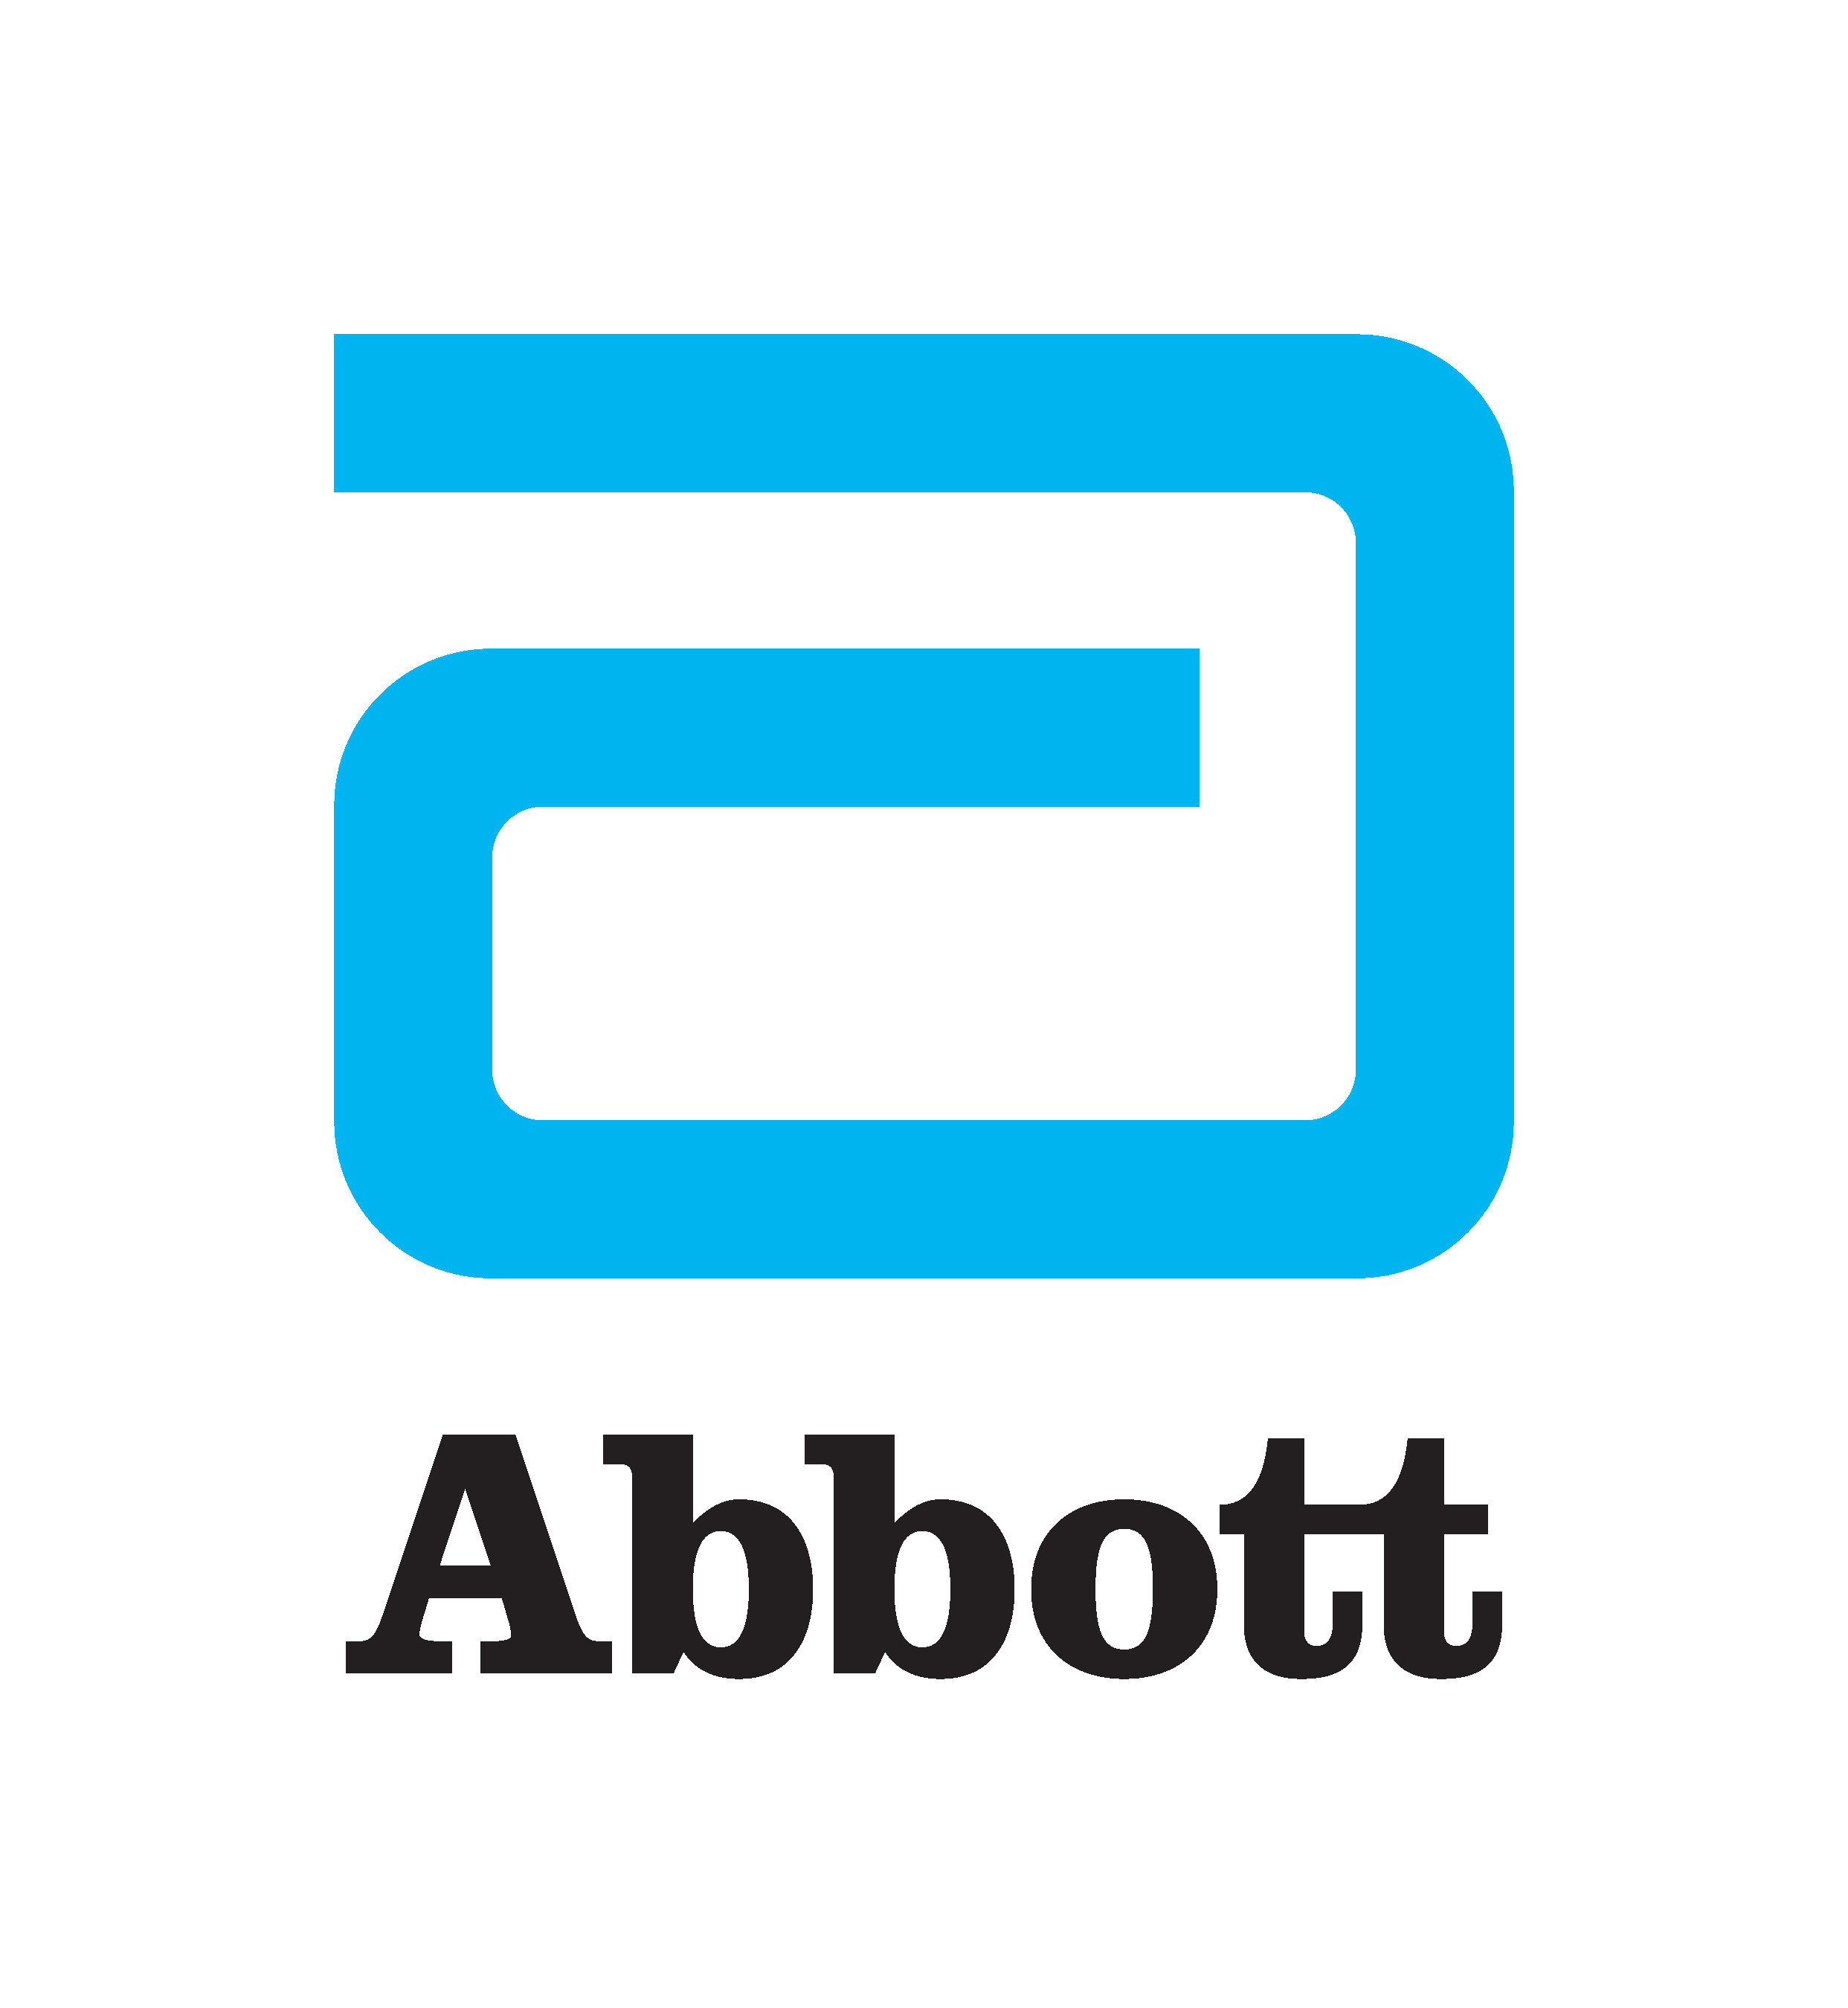 Abbott's Breakthrough Dissolving Stent Receives FDA Approval for Arteries Below the Knee